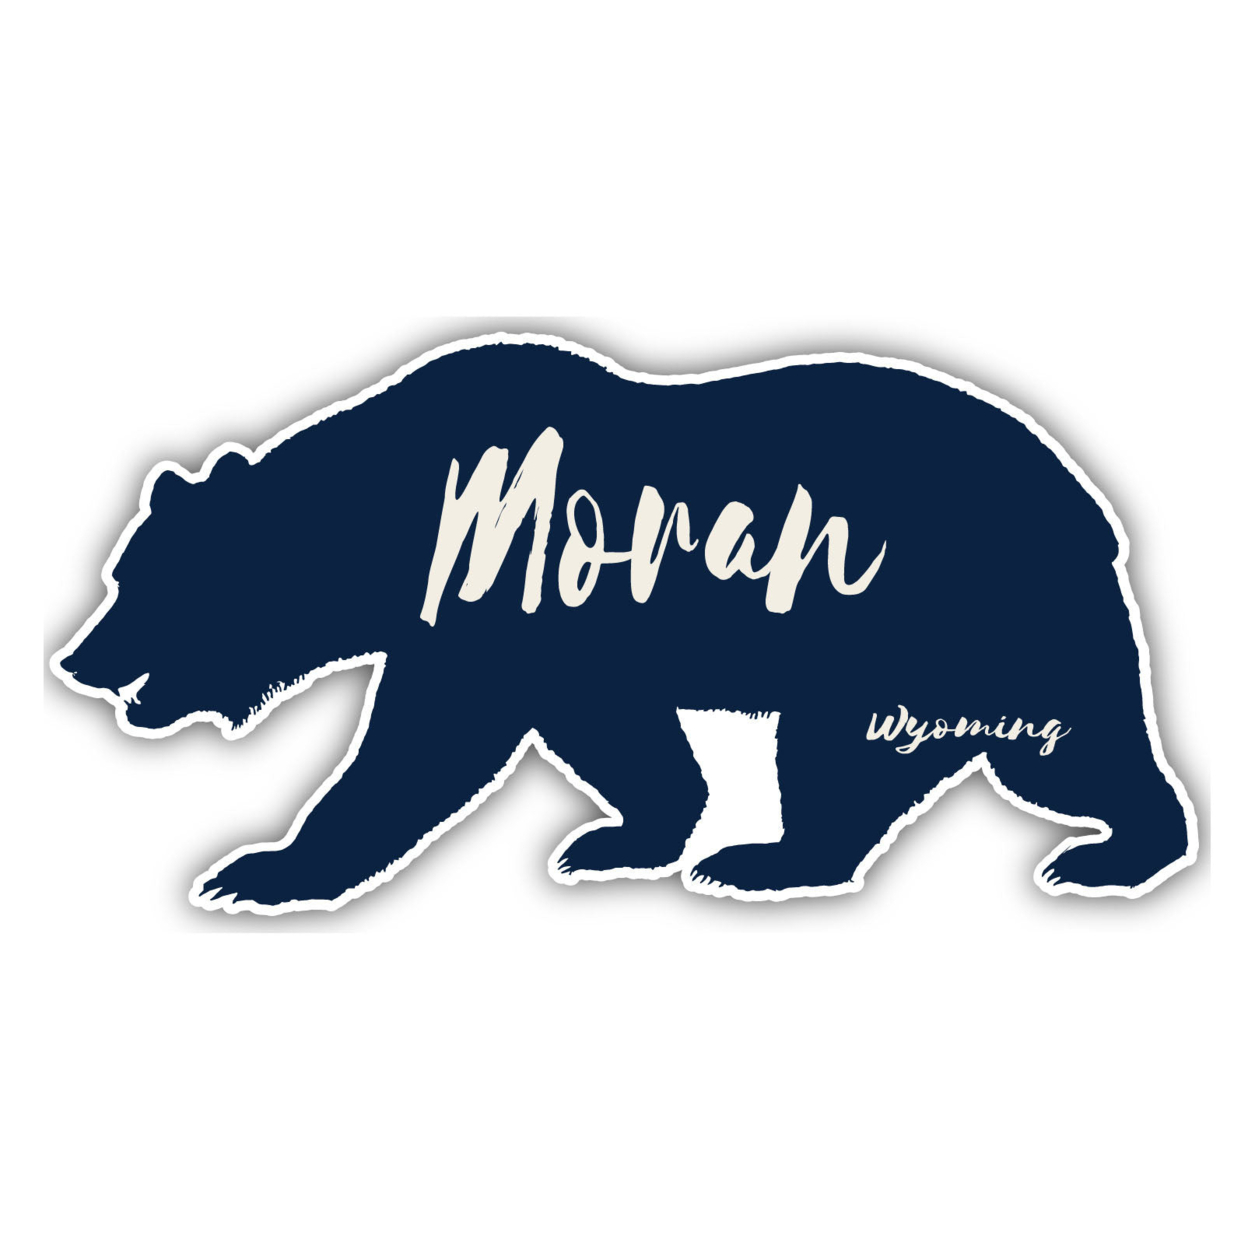 Moran Wyoming Souvenir Decorative Stickers (Choose Theme And Size) - Single Unit, 4-Inch, Tent